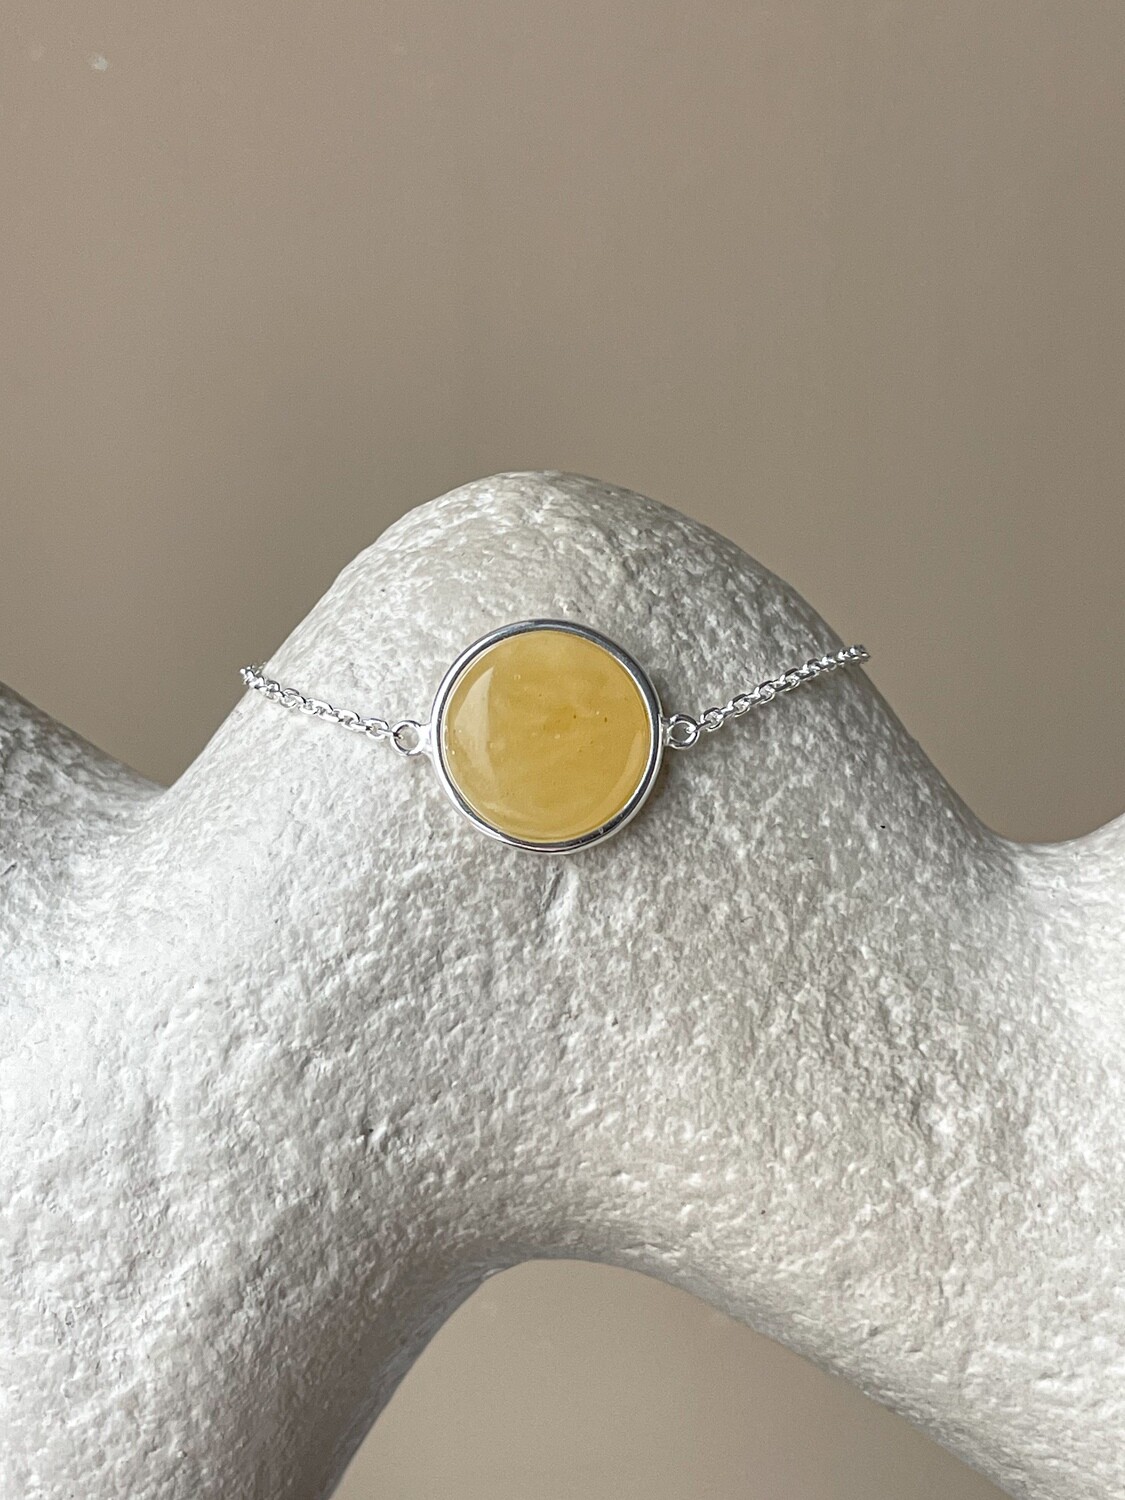 Браслет на цепочке с медовым янтарем, размер 16-18